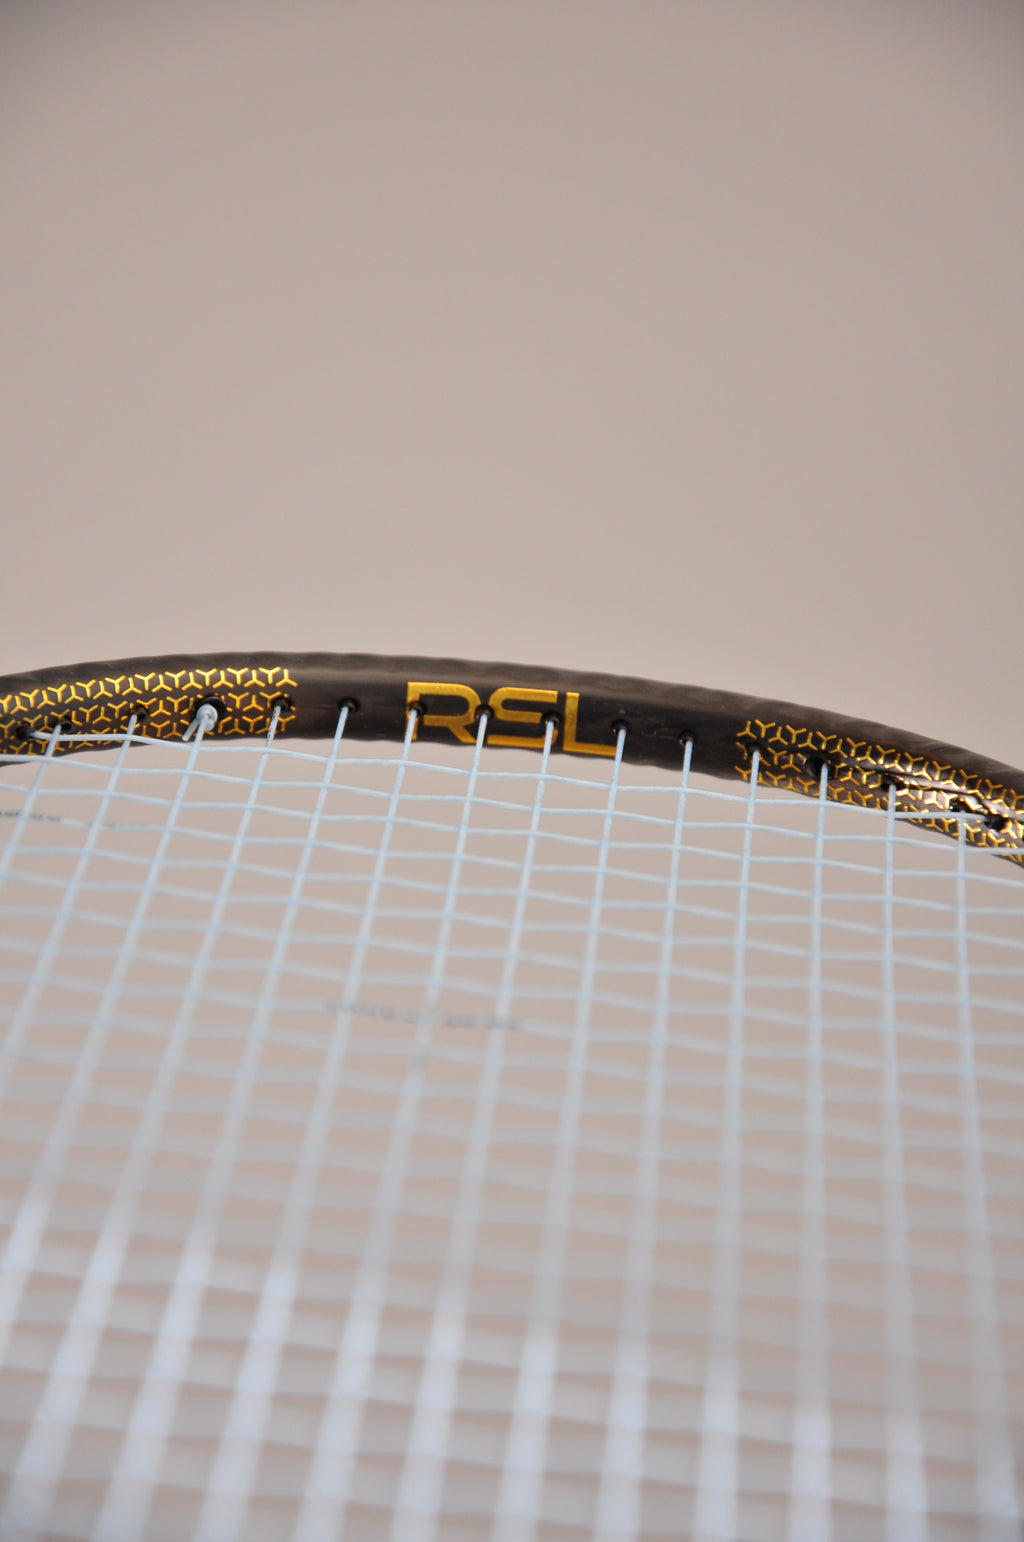 RSL Magnum M8 badminton racket, Free shorts, grip and string. - badminton racket review